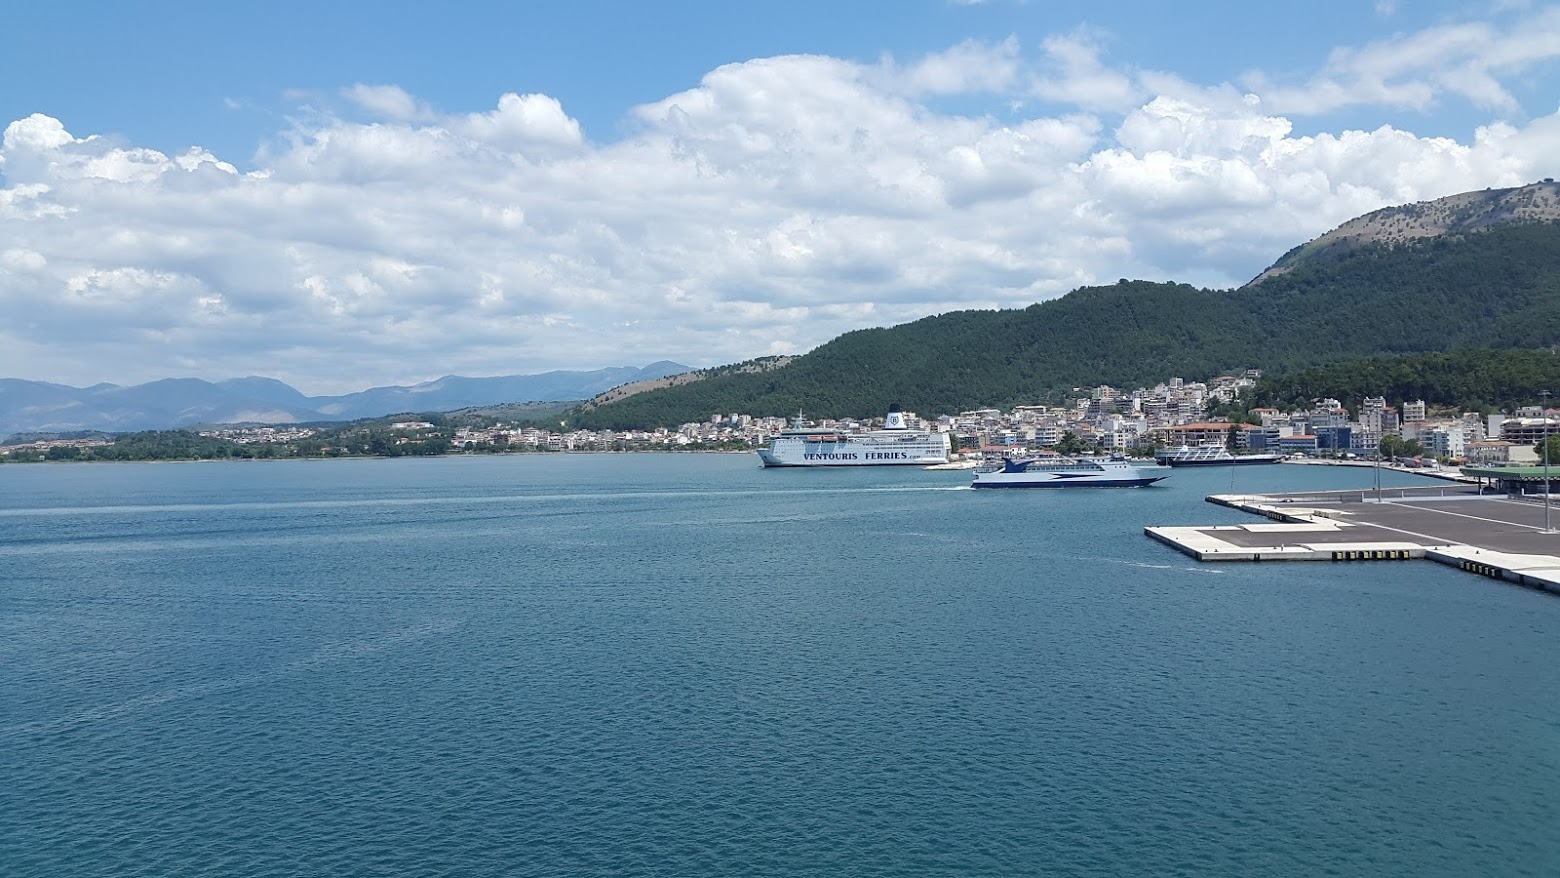 Igoumenitsa port, view from the deck.